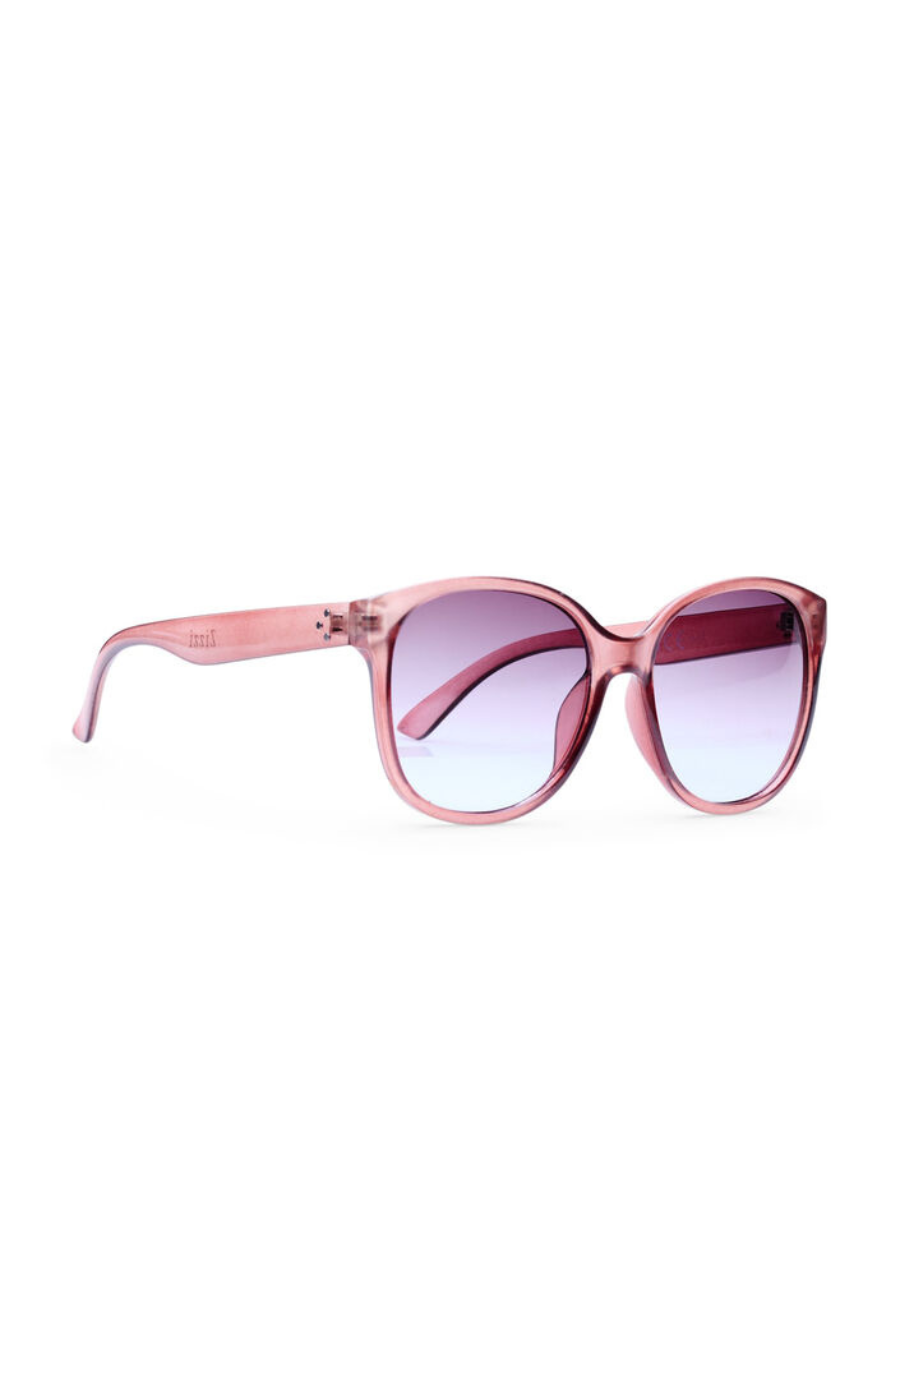 Zizzi Dsado Sunglasses in Plum - Wardrobe Plus